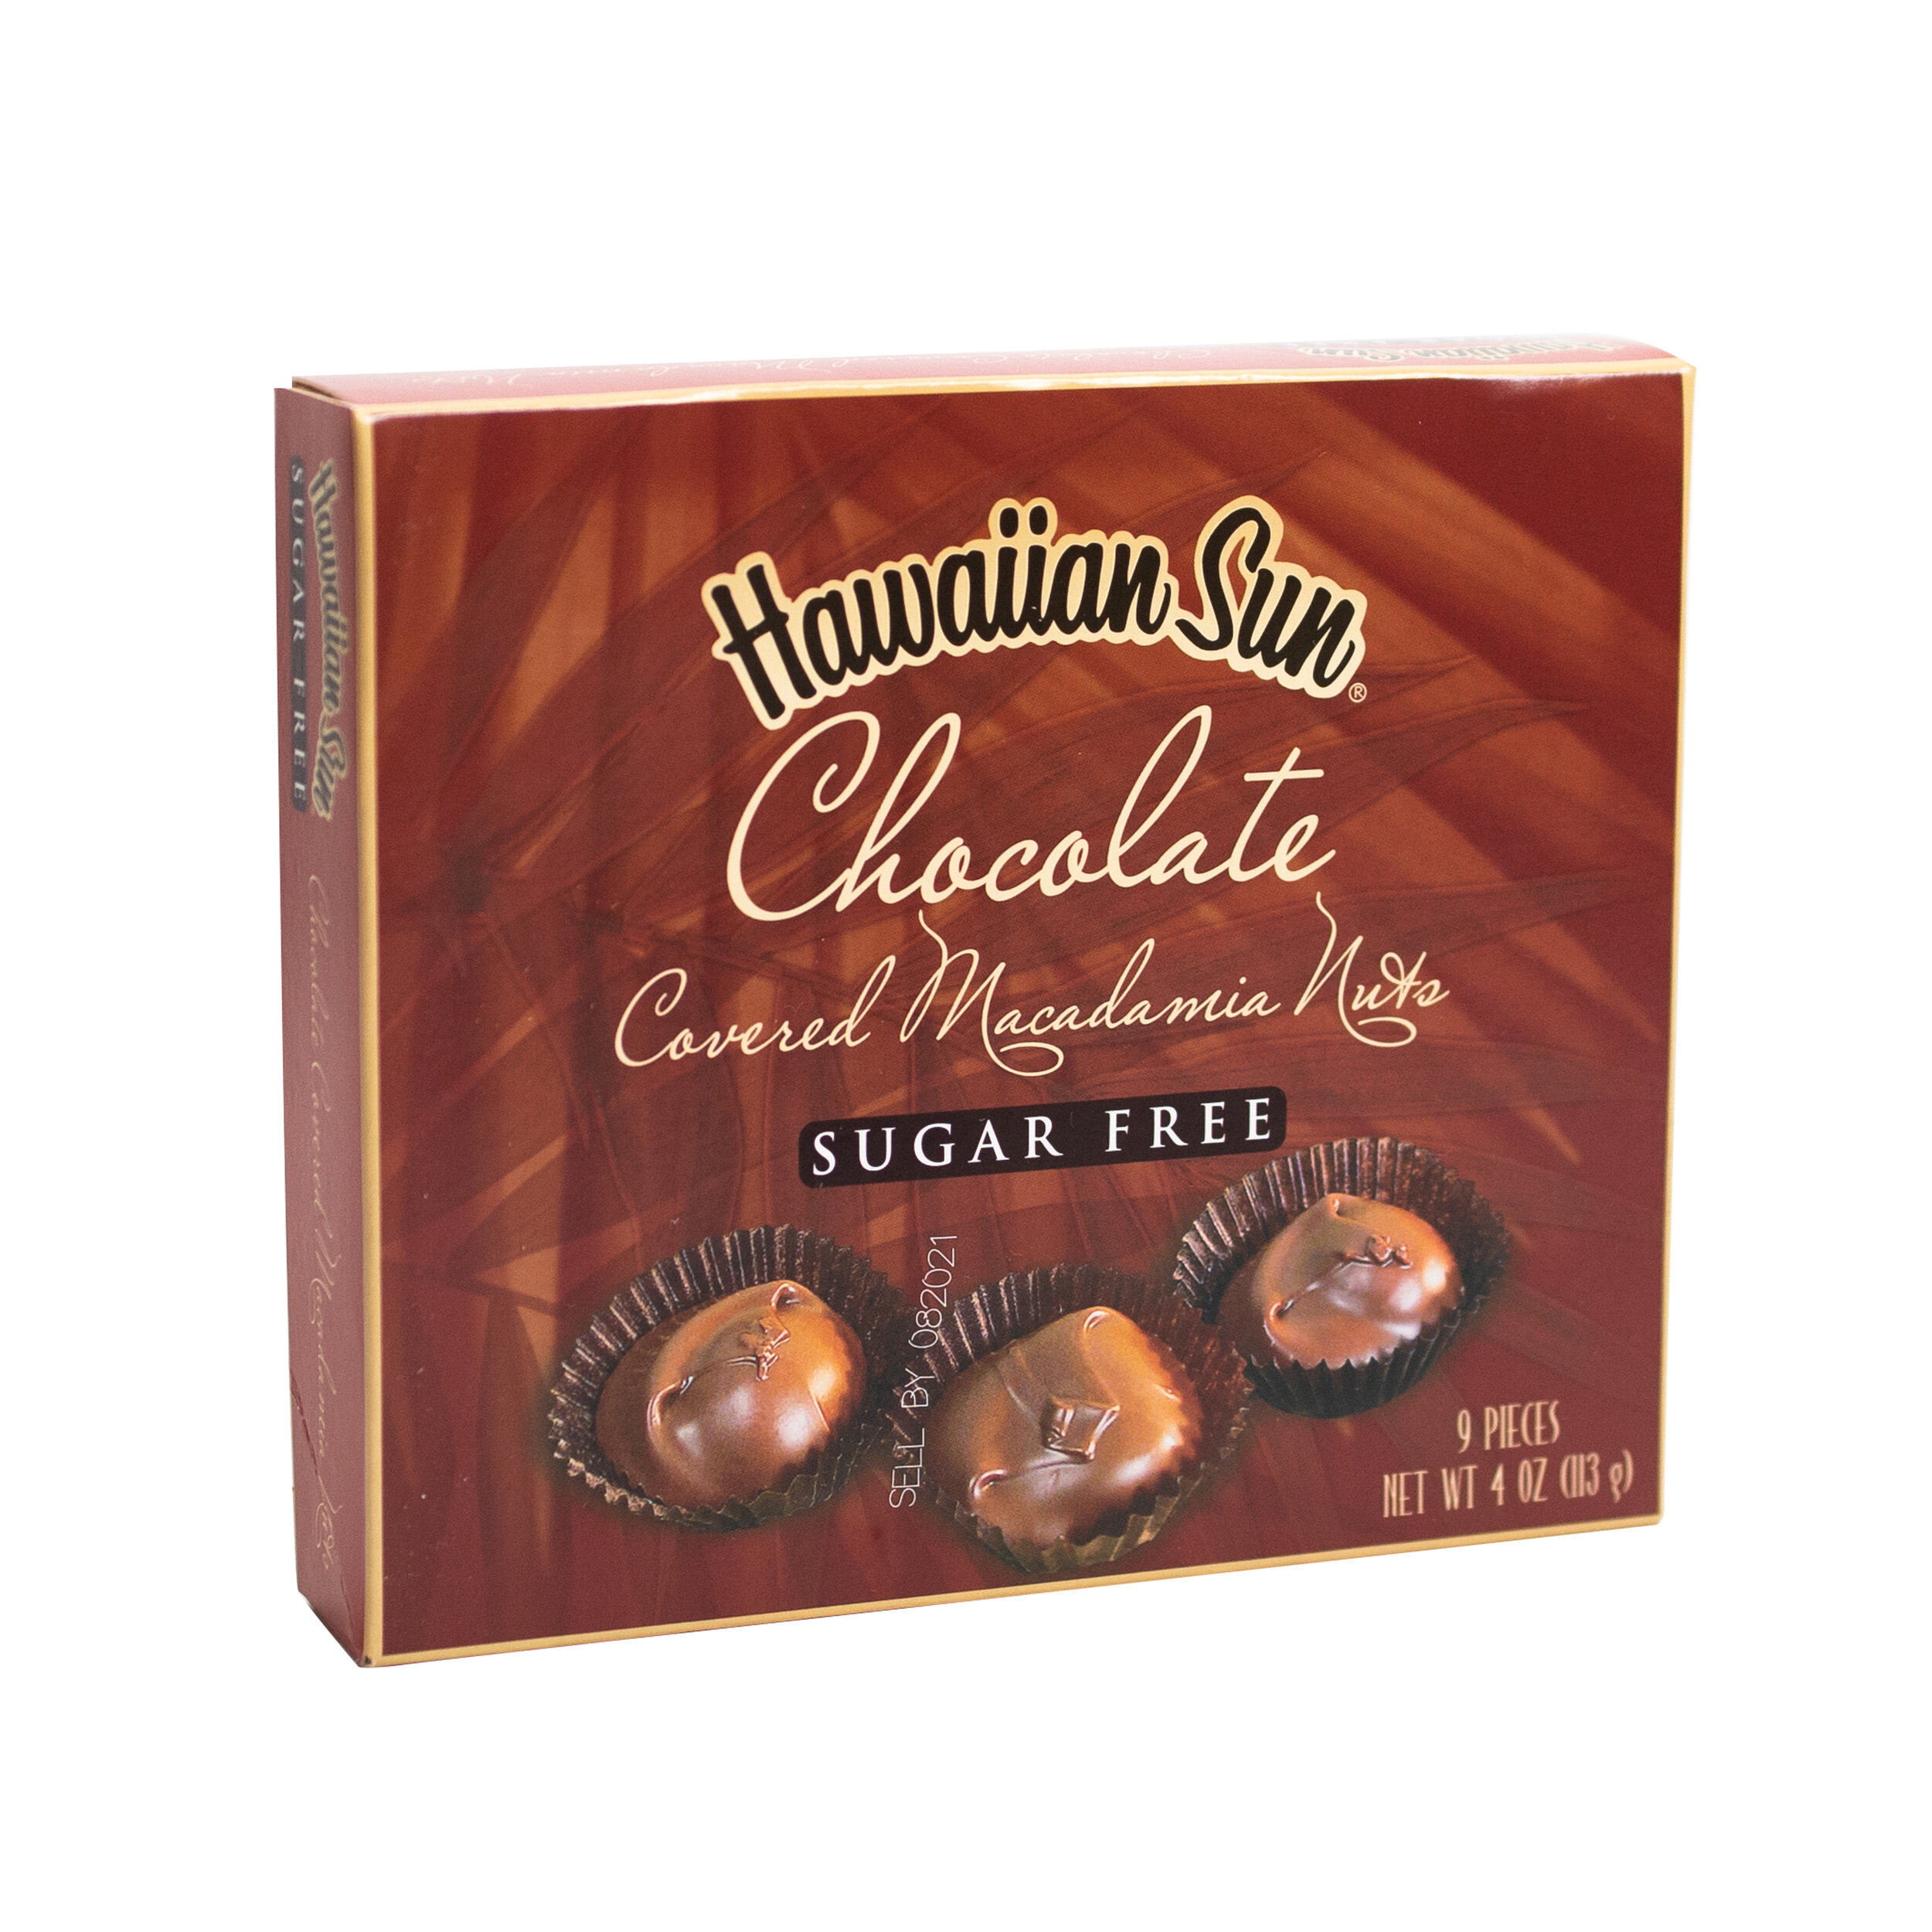 Sugar Free Chocolate Covered Macadamia Nuts